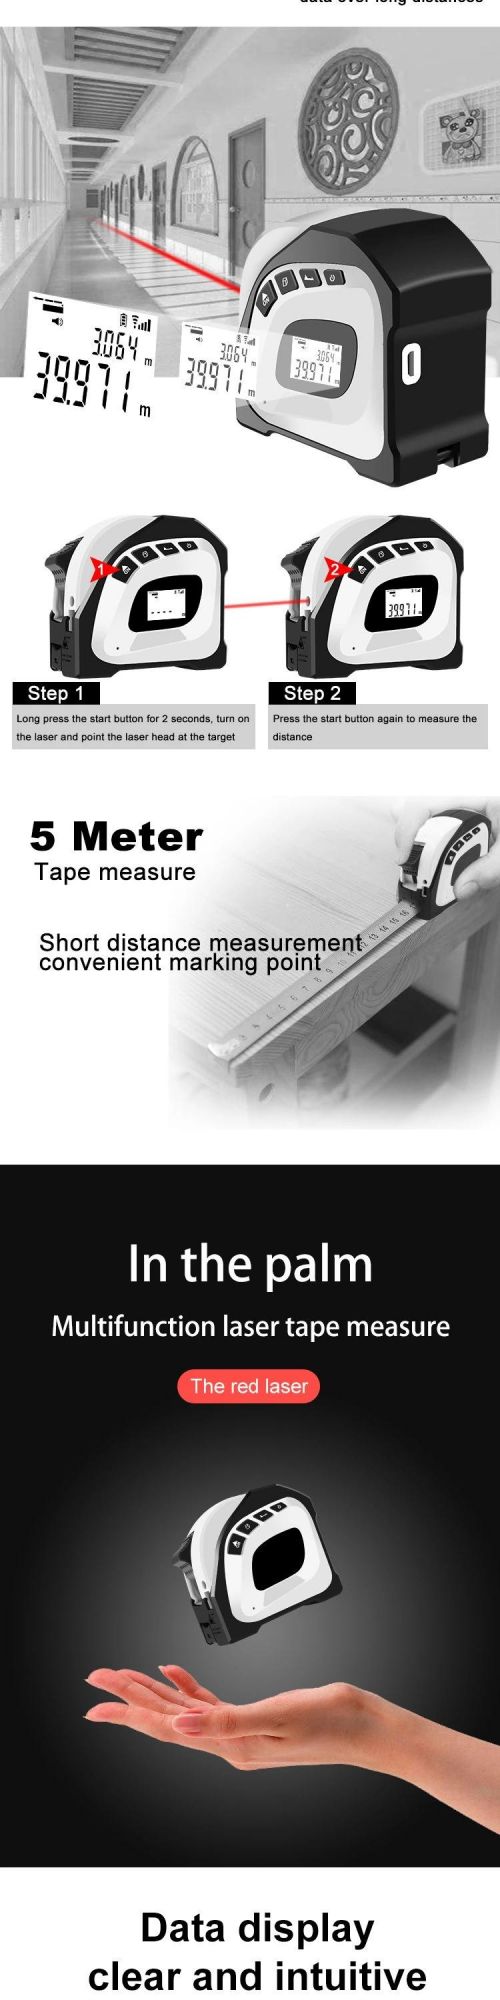 40m Measure Distance Electronic Measuring Tape Price